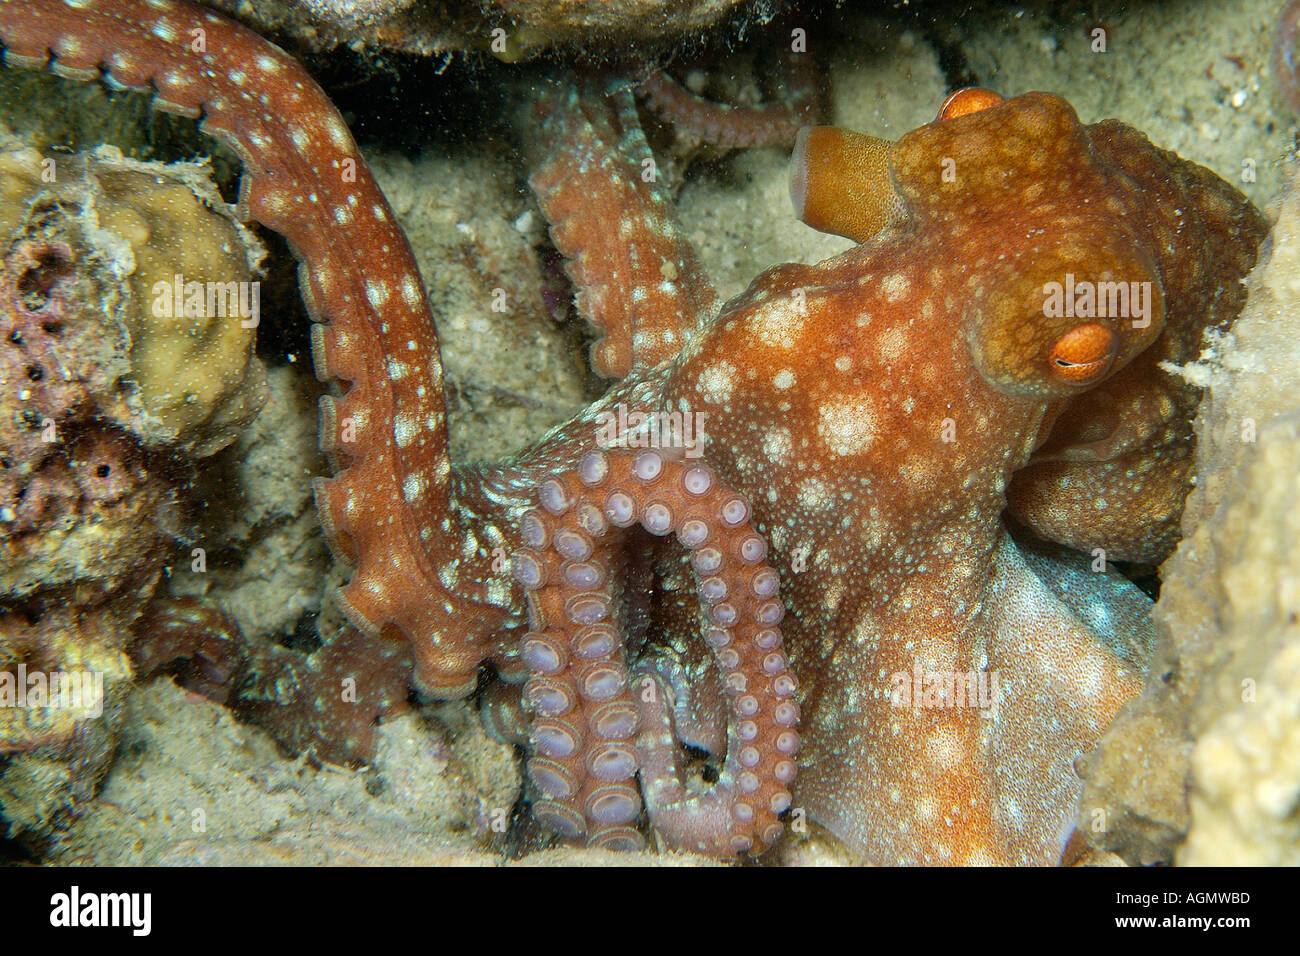 Starry night octopus Octopus luteus foraging on coral reef at night Malapascua Cebu Philippines Visayan Sea Stock Photo